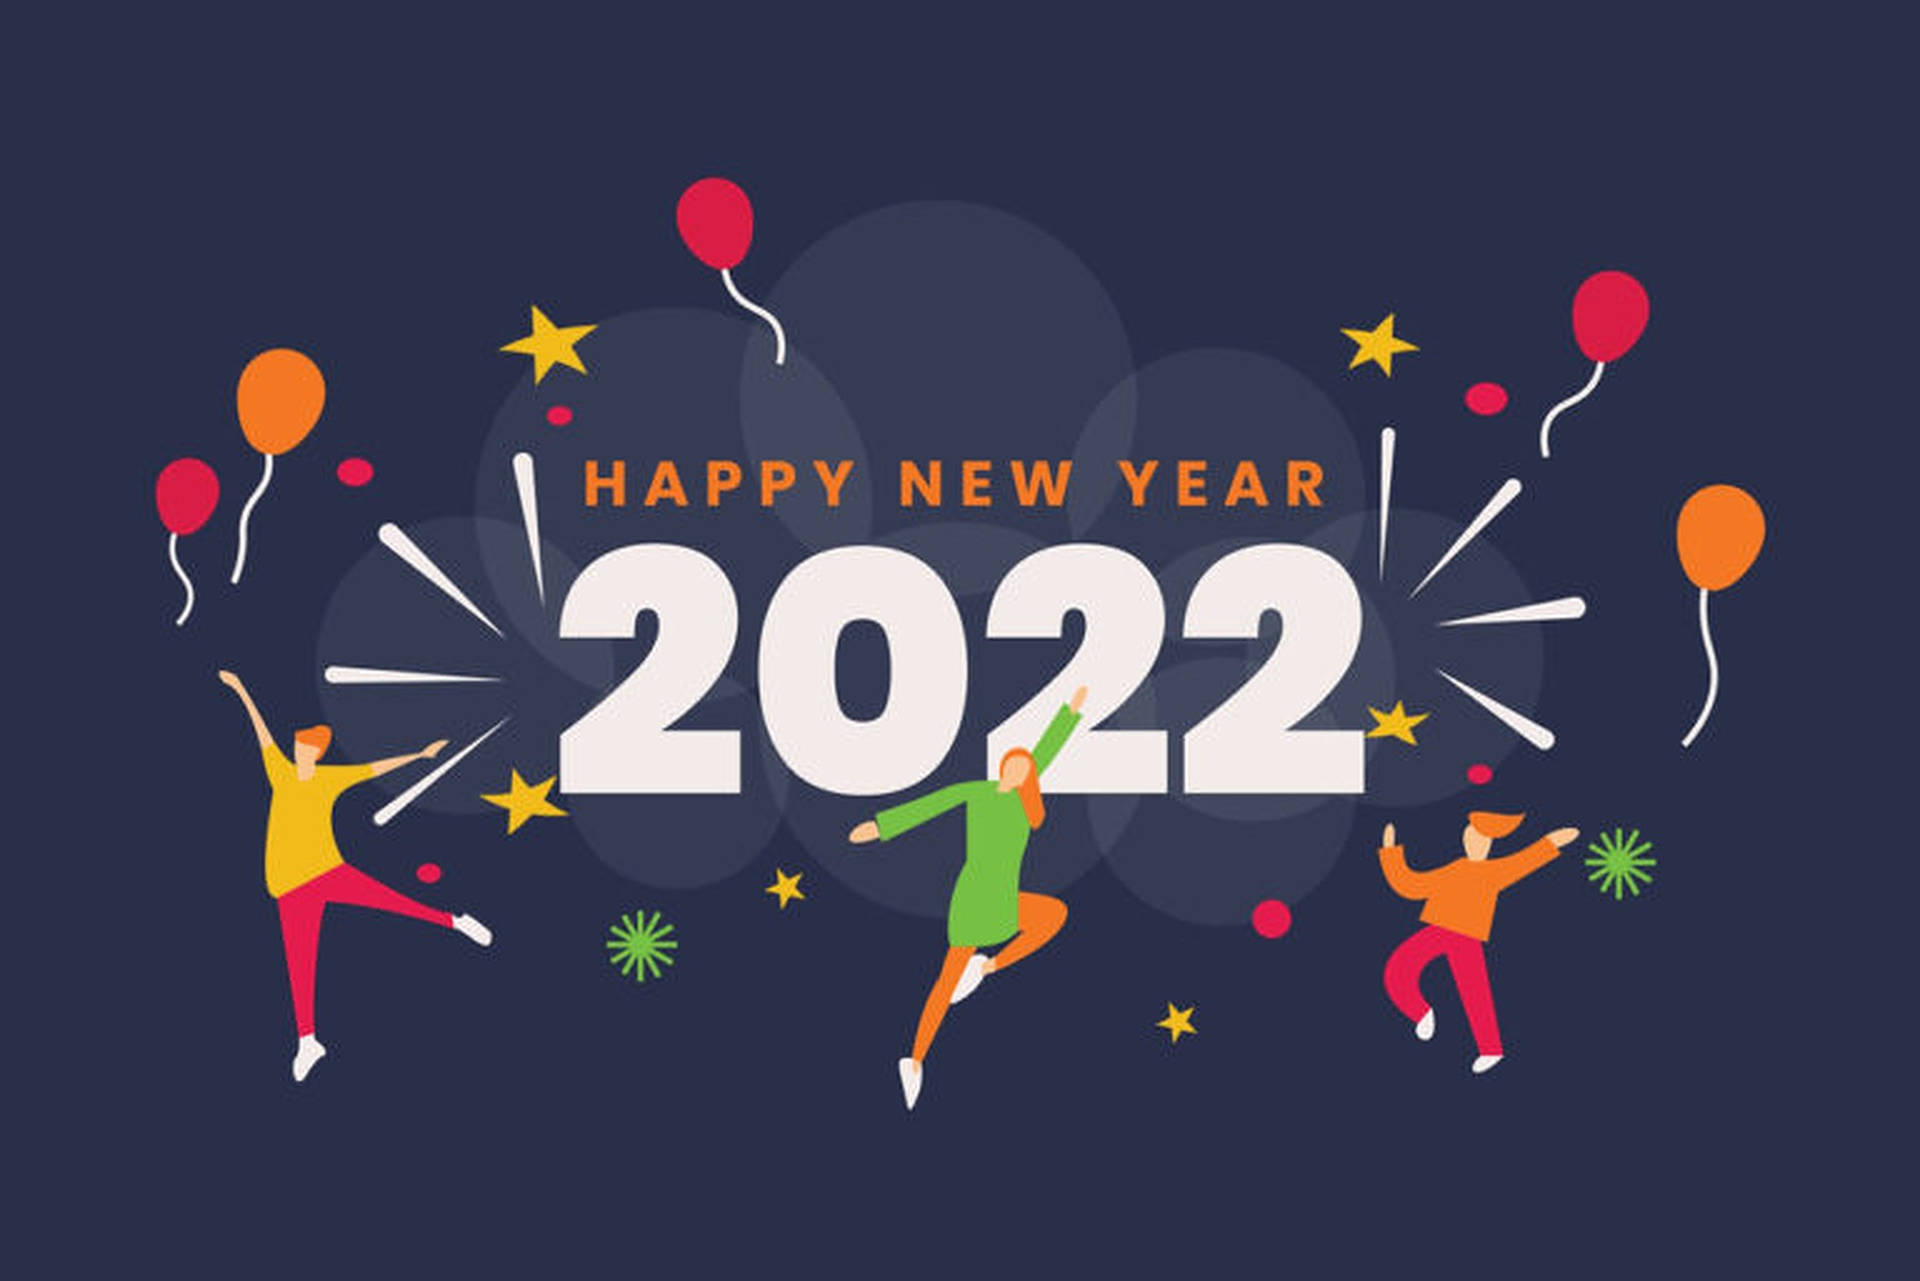 Free Happy New Year 2022 Wallpaper Downloads, [100+] Happy New Year 2022  Wallpapers for FREE 